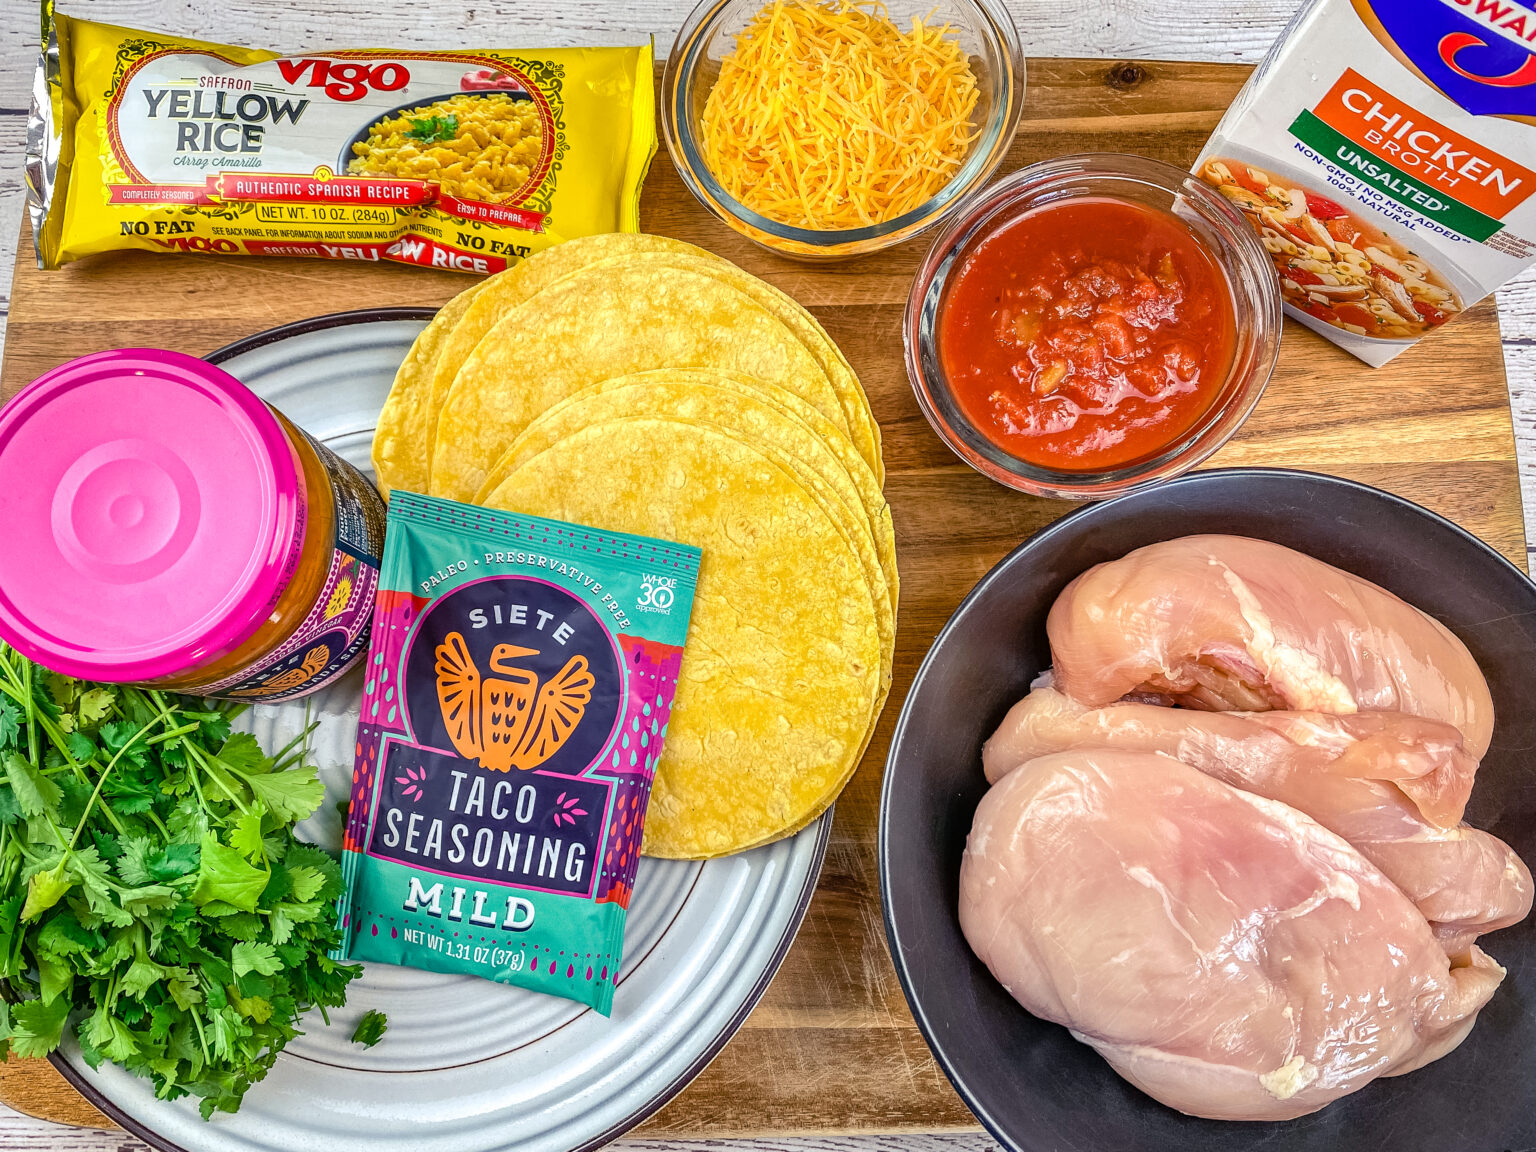 Simple Enchiladas - Simply Sells Kitchen